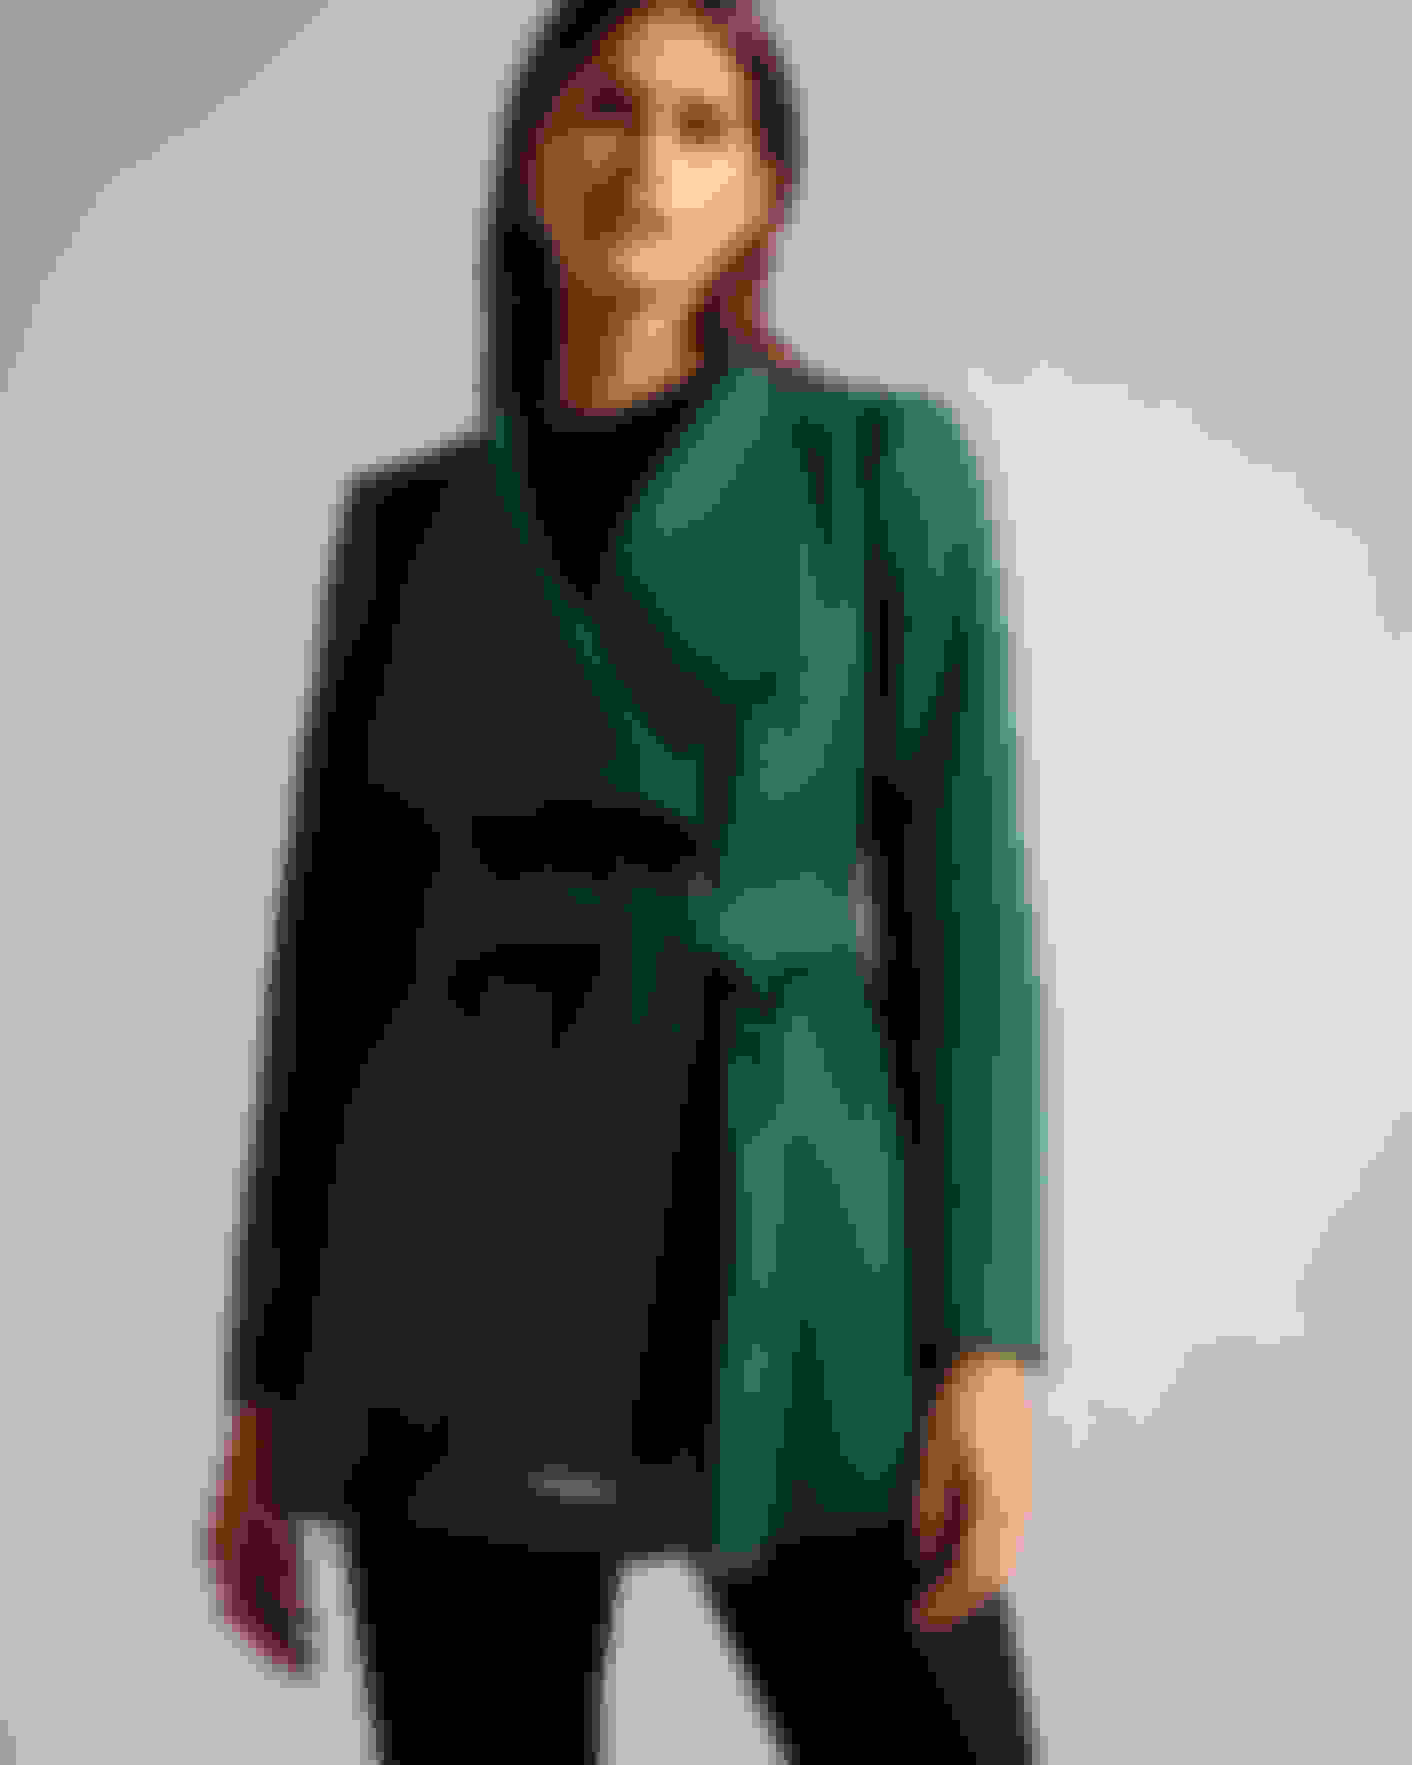 Dark Green Wool Cashmere Wrap Coat Ted Baker